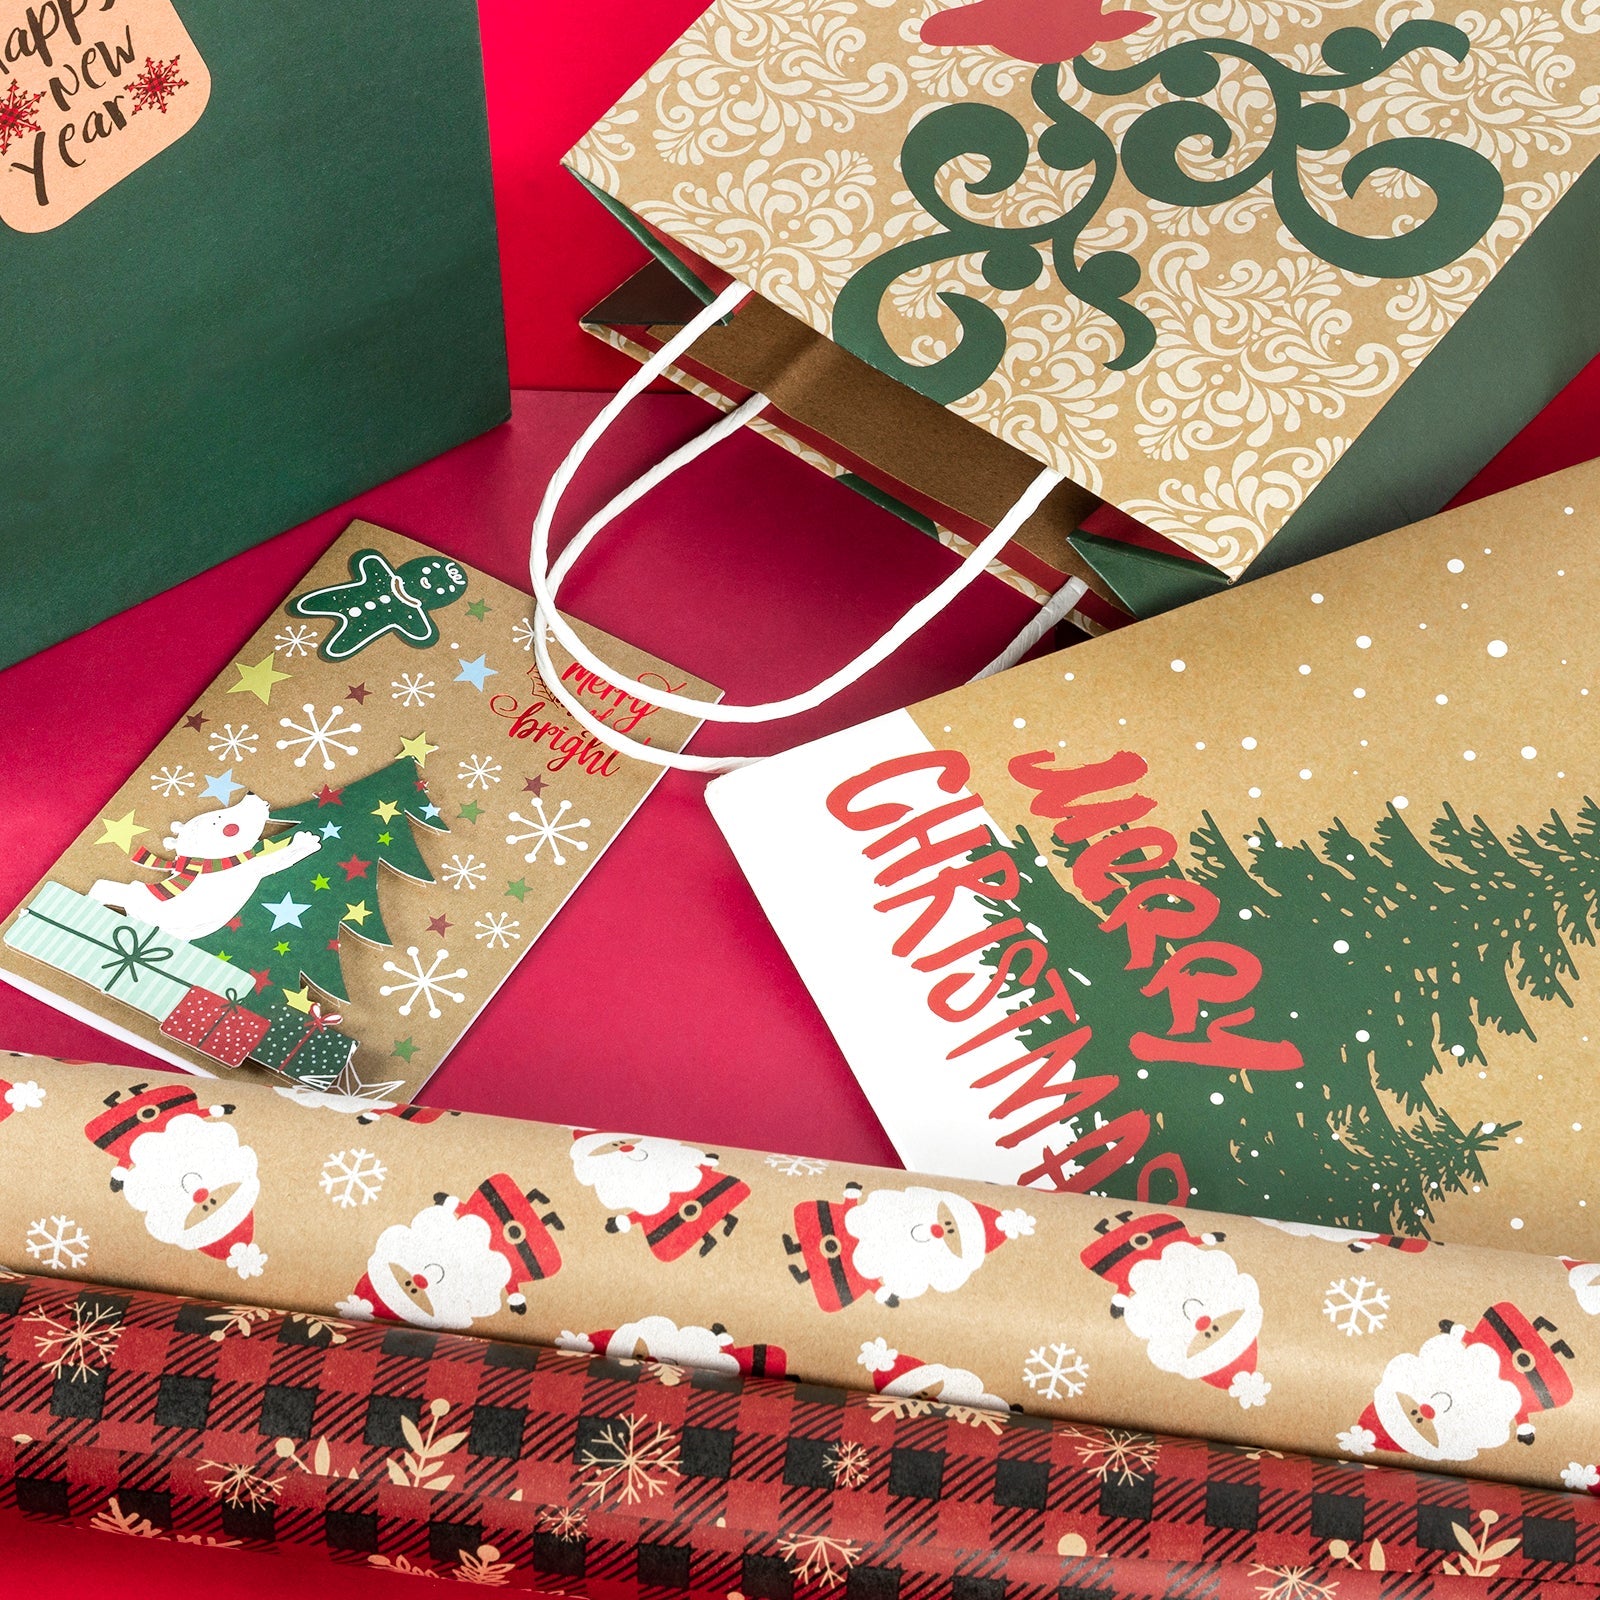 Assort Medium & Large Christmas Gift Bags - Christmas Trees/ Pine Trees/ Deer/ Red Cars - 8 Pack